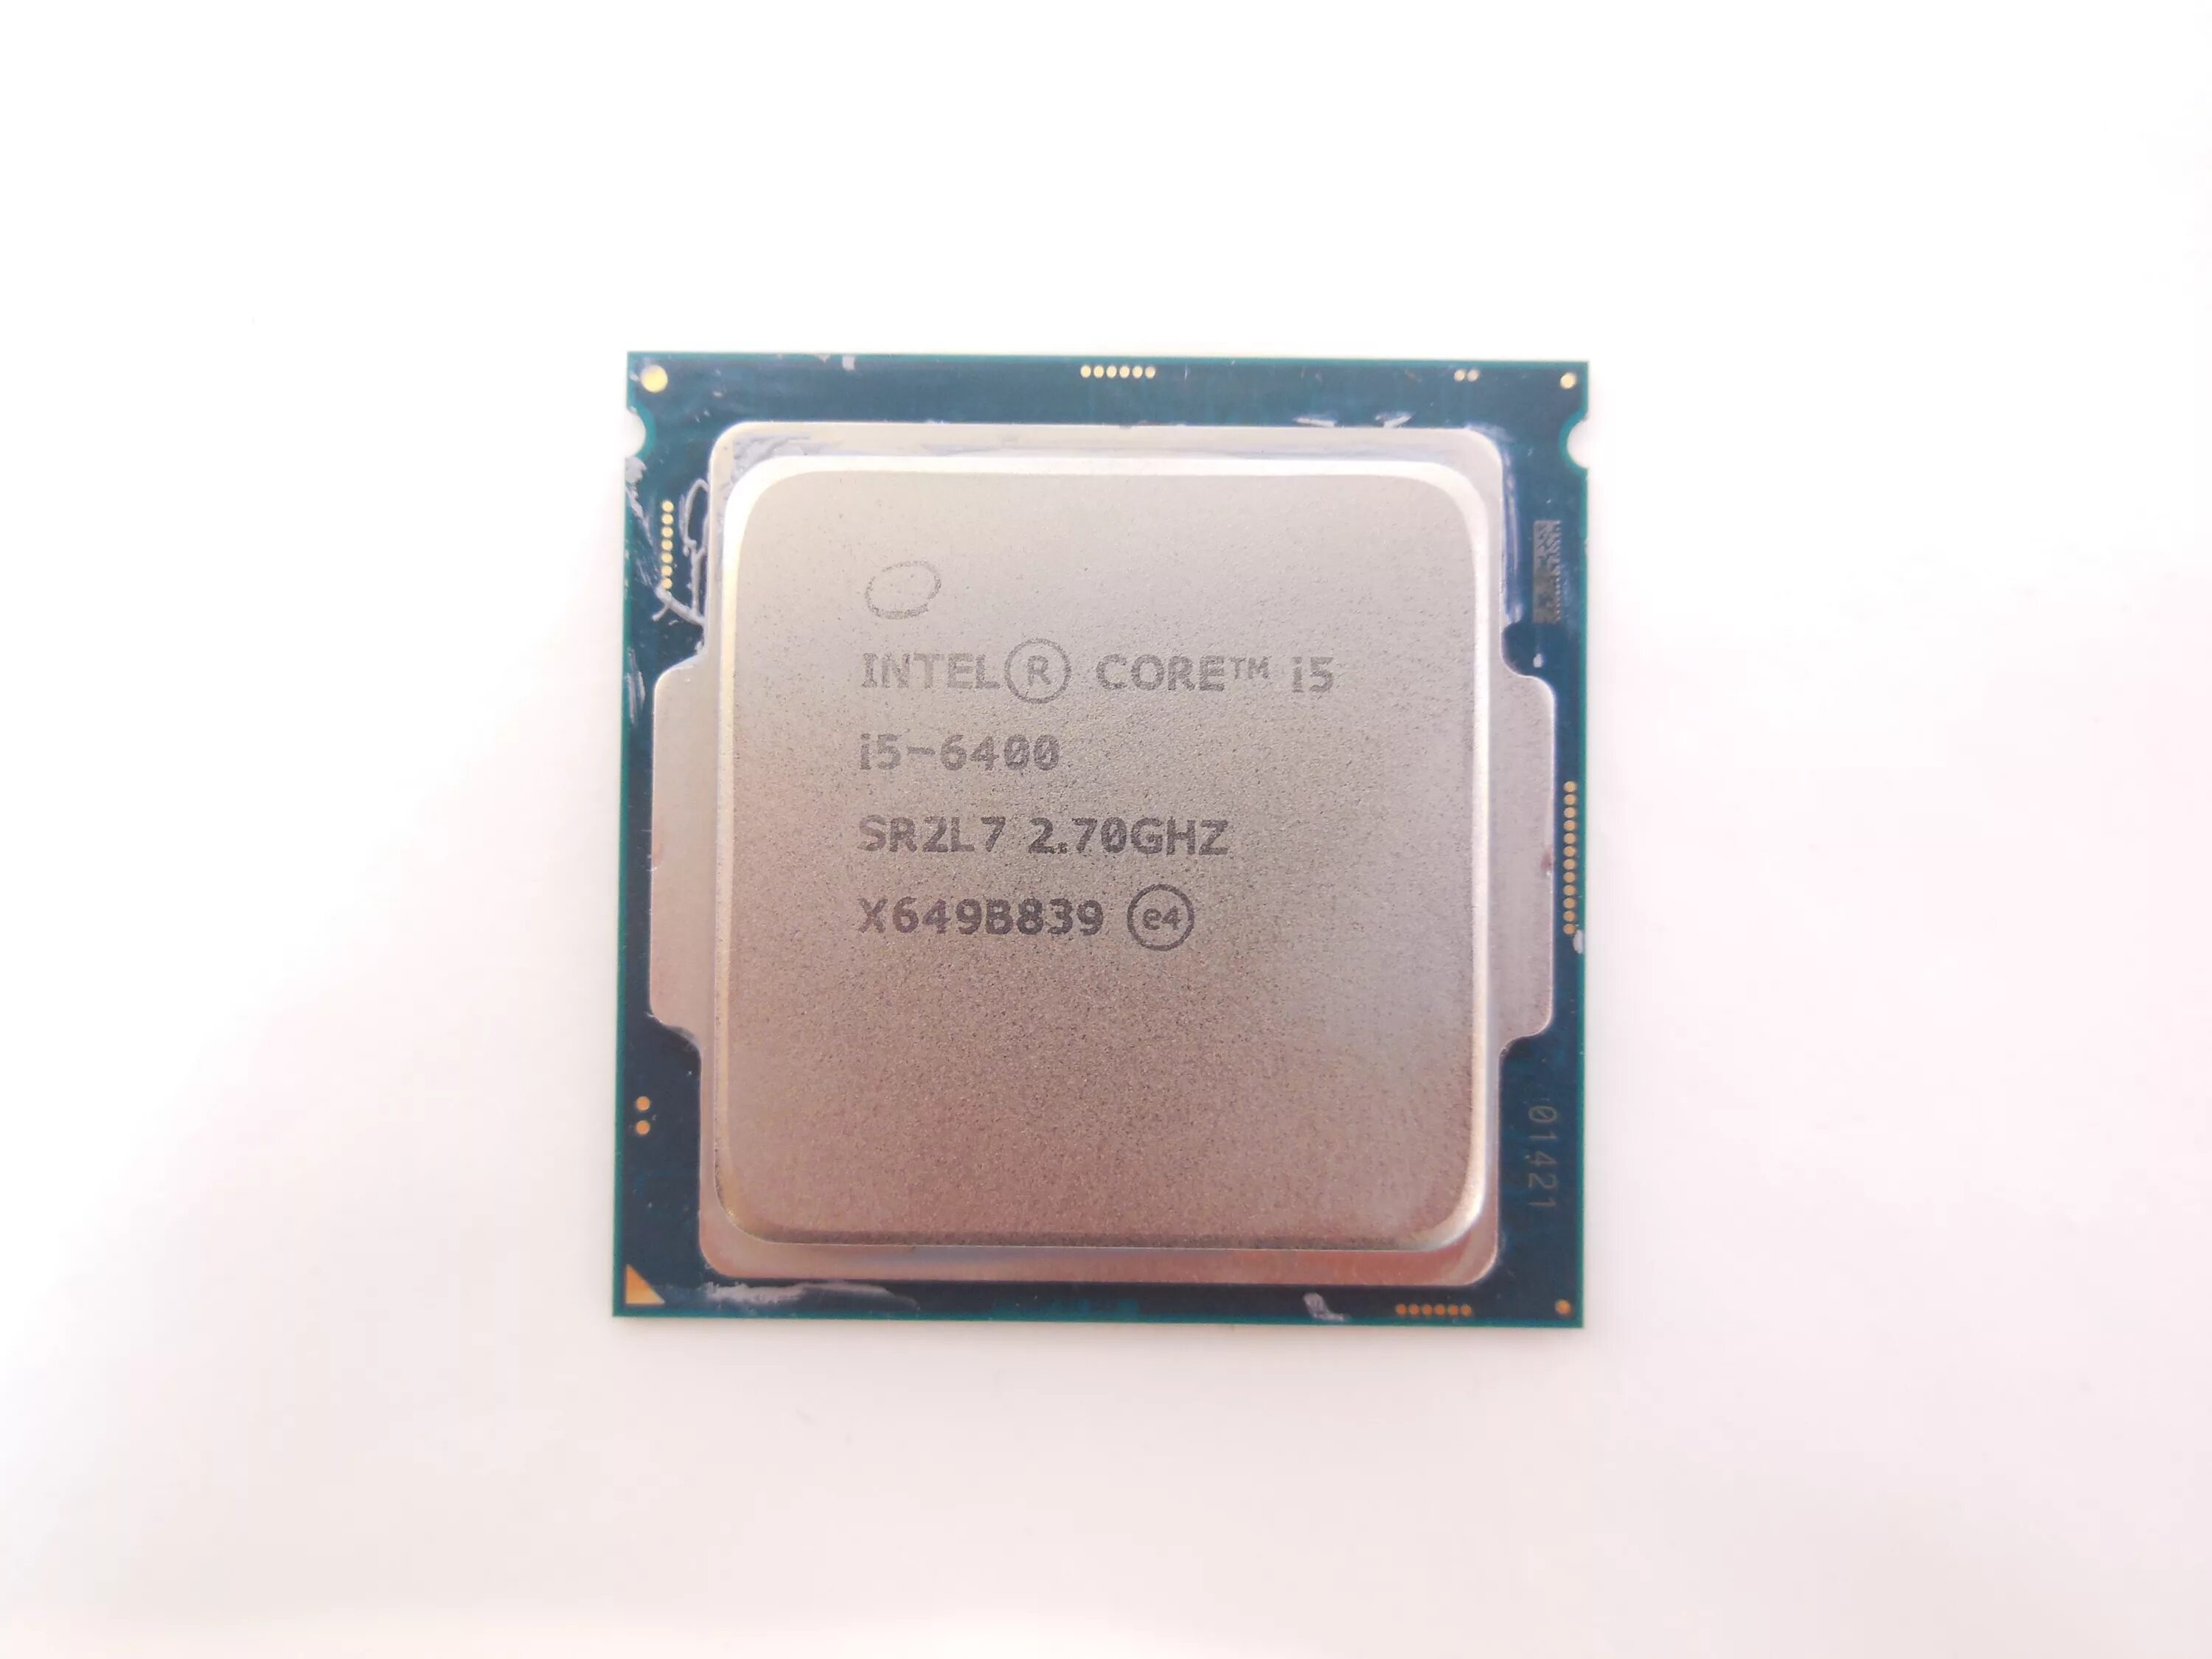 Core i3 1700. Intel Core i5-6400. Процессор Intel Core i4. Intel(r) Core(TM) i5-6400 CPU @ 2.70GHZ 2.70 GHZ. Intel Core i5 6400 2.7 GHZ.